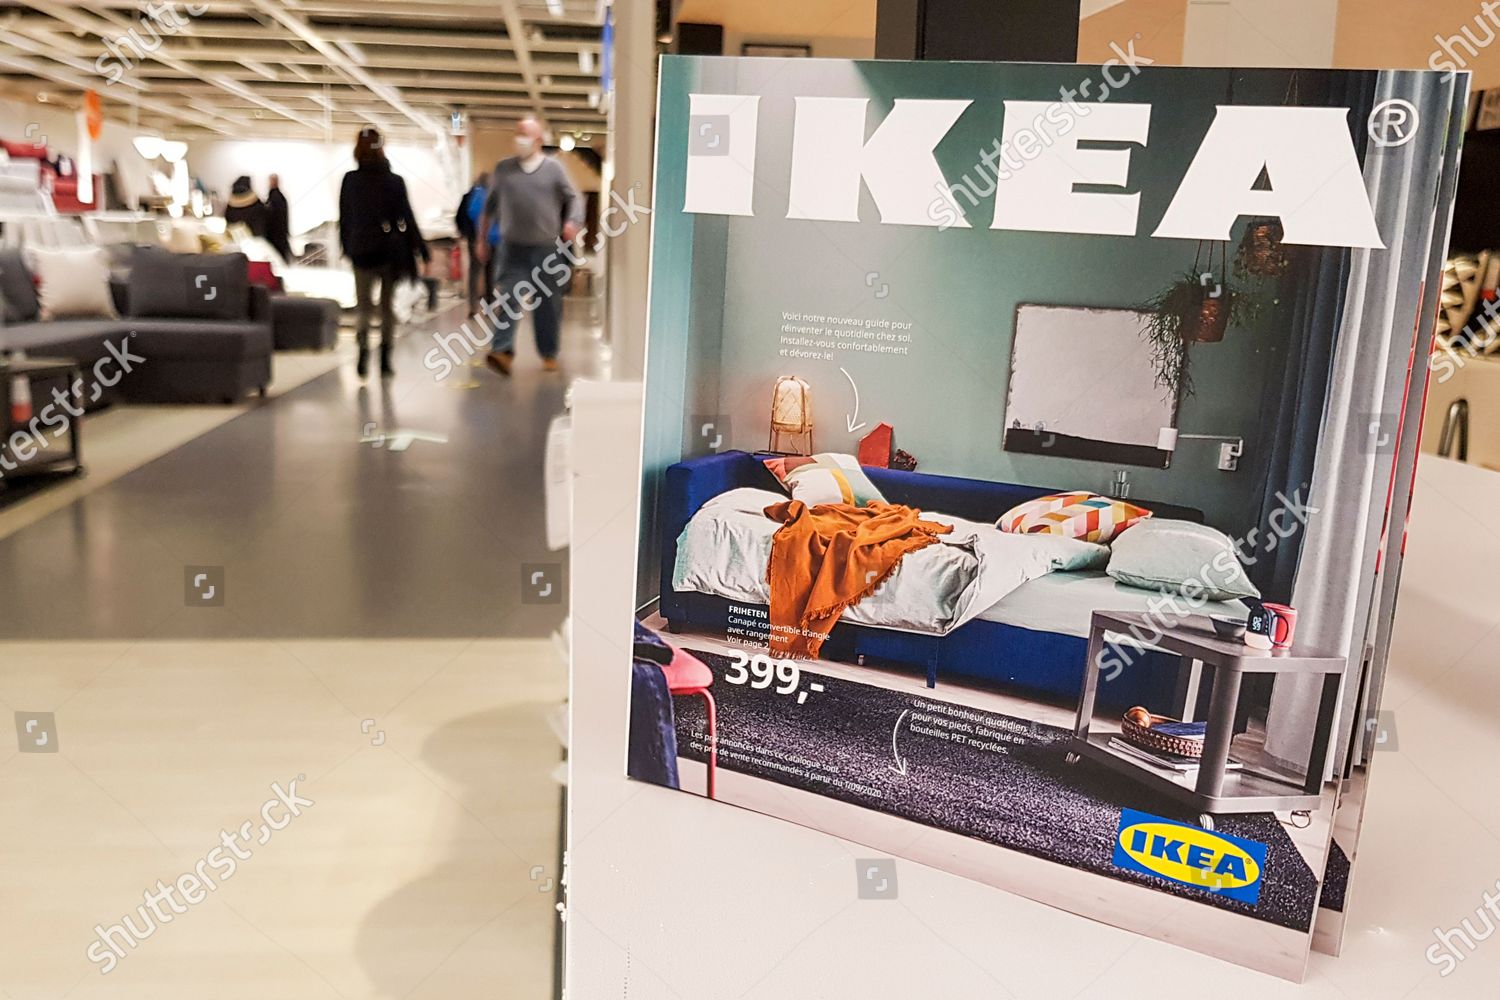 company Ikea will no Editorial Stock Photo - Stock Image | Shutterstock